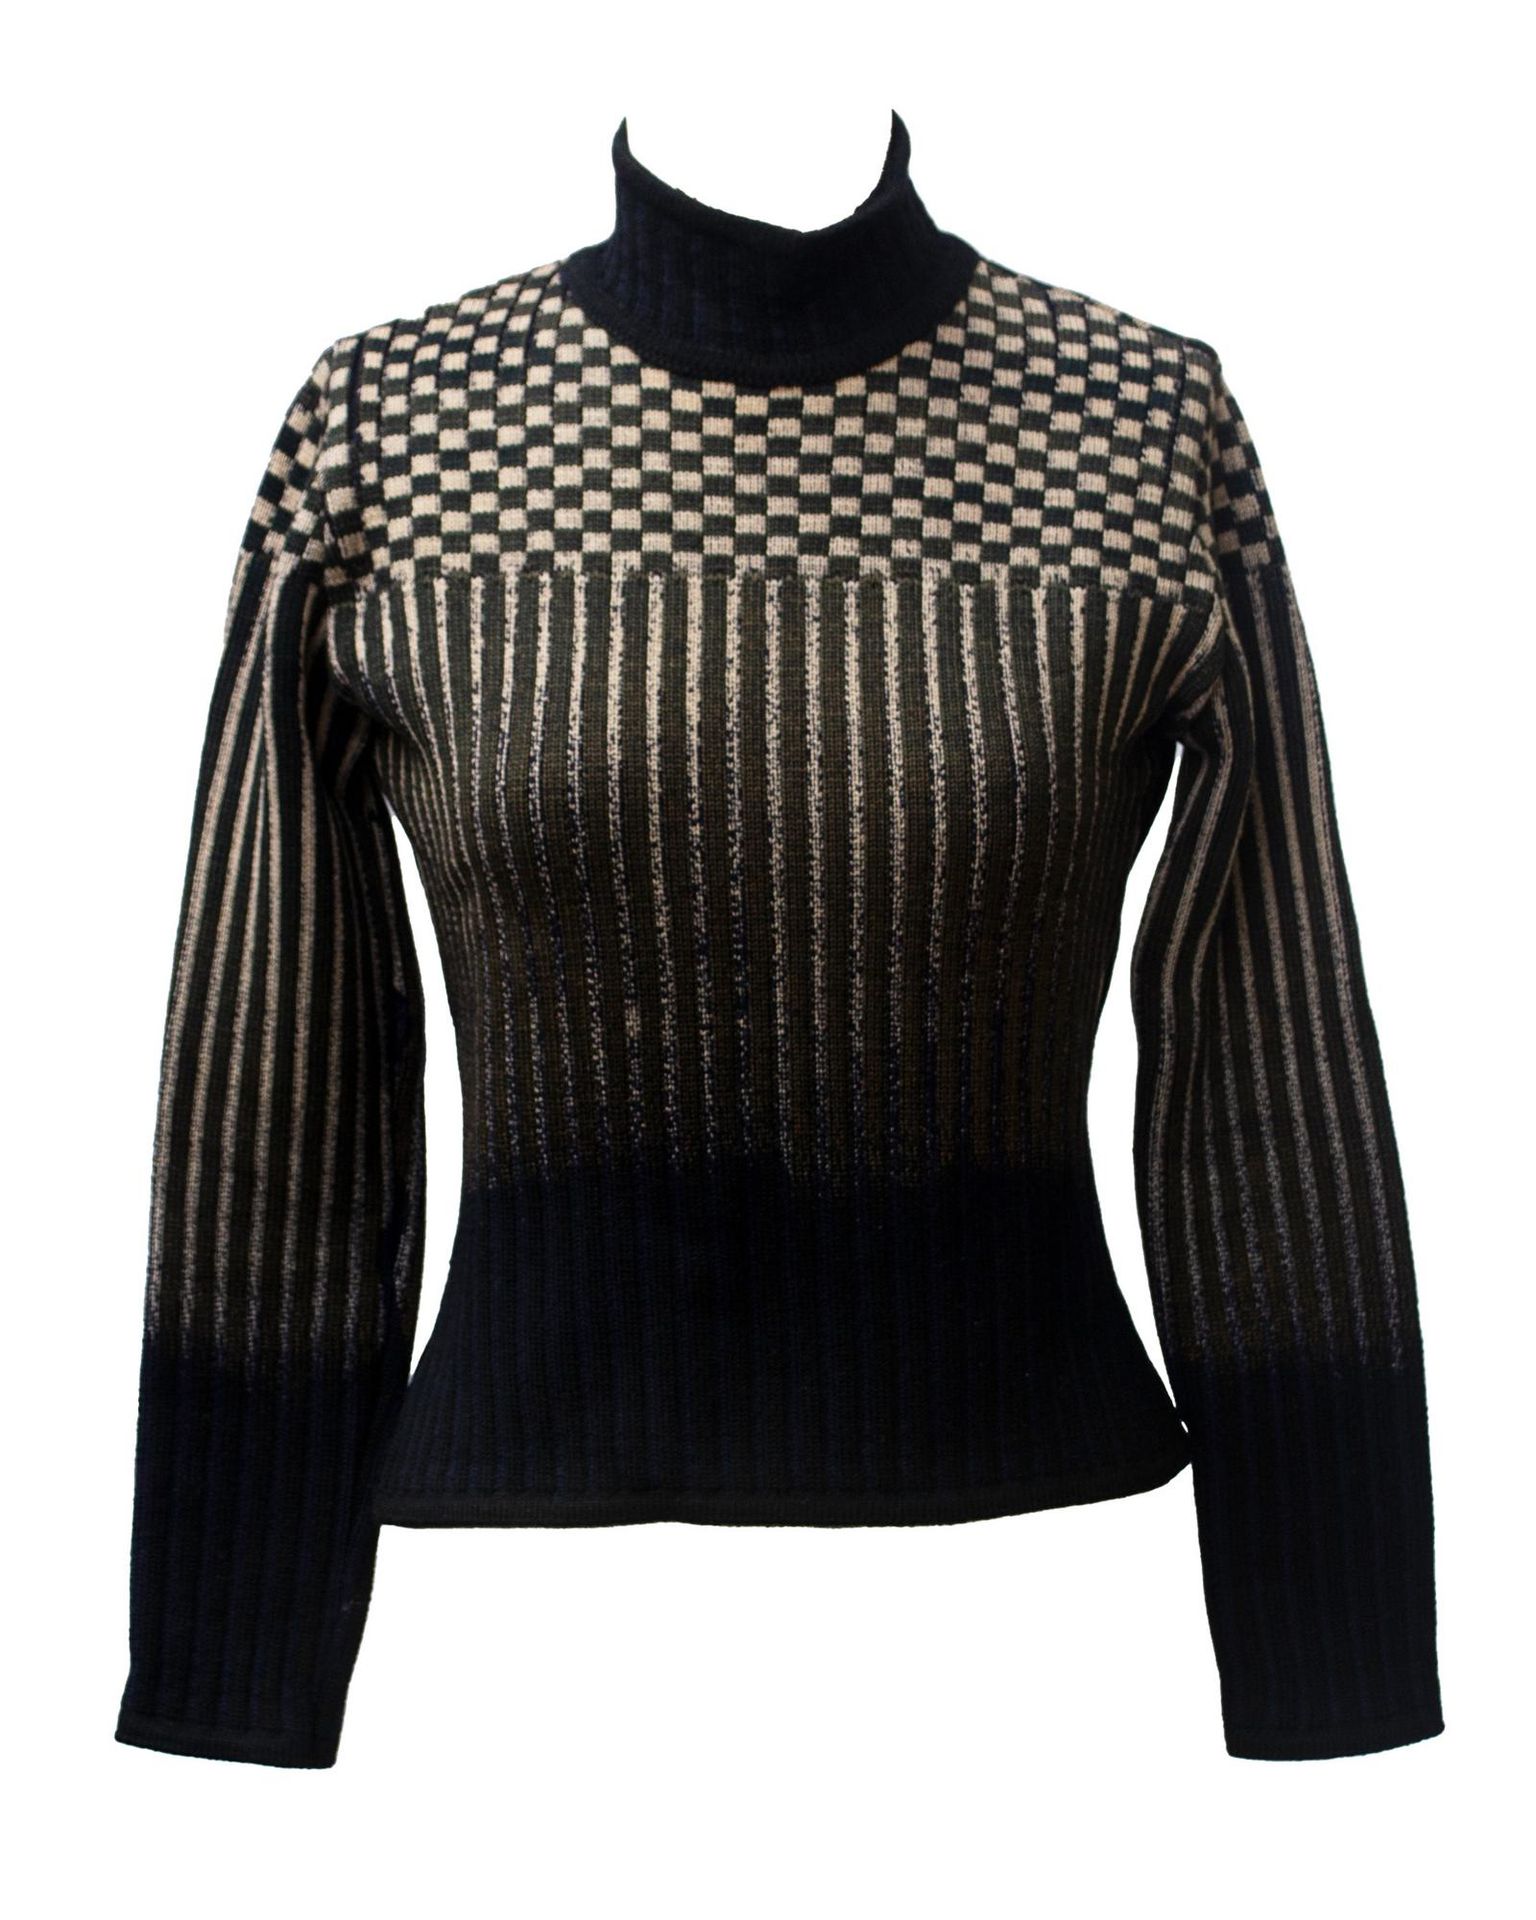 Null Jean Paul Gaultier

高领毛衣



描述。

这款纯羊毛提花高领毛衣采用条纹和达米尔图案。颜色从黑色到午夜蓝和白色的阴影。来自80&hellip;